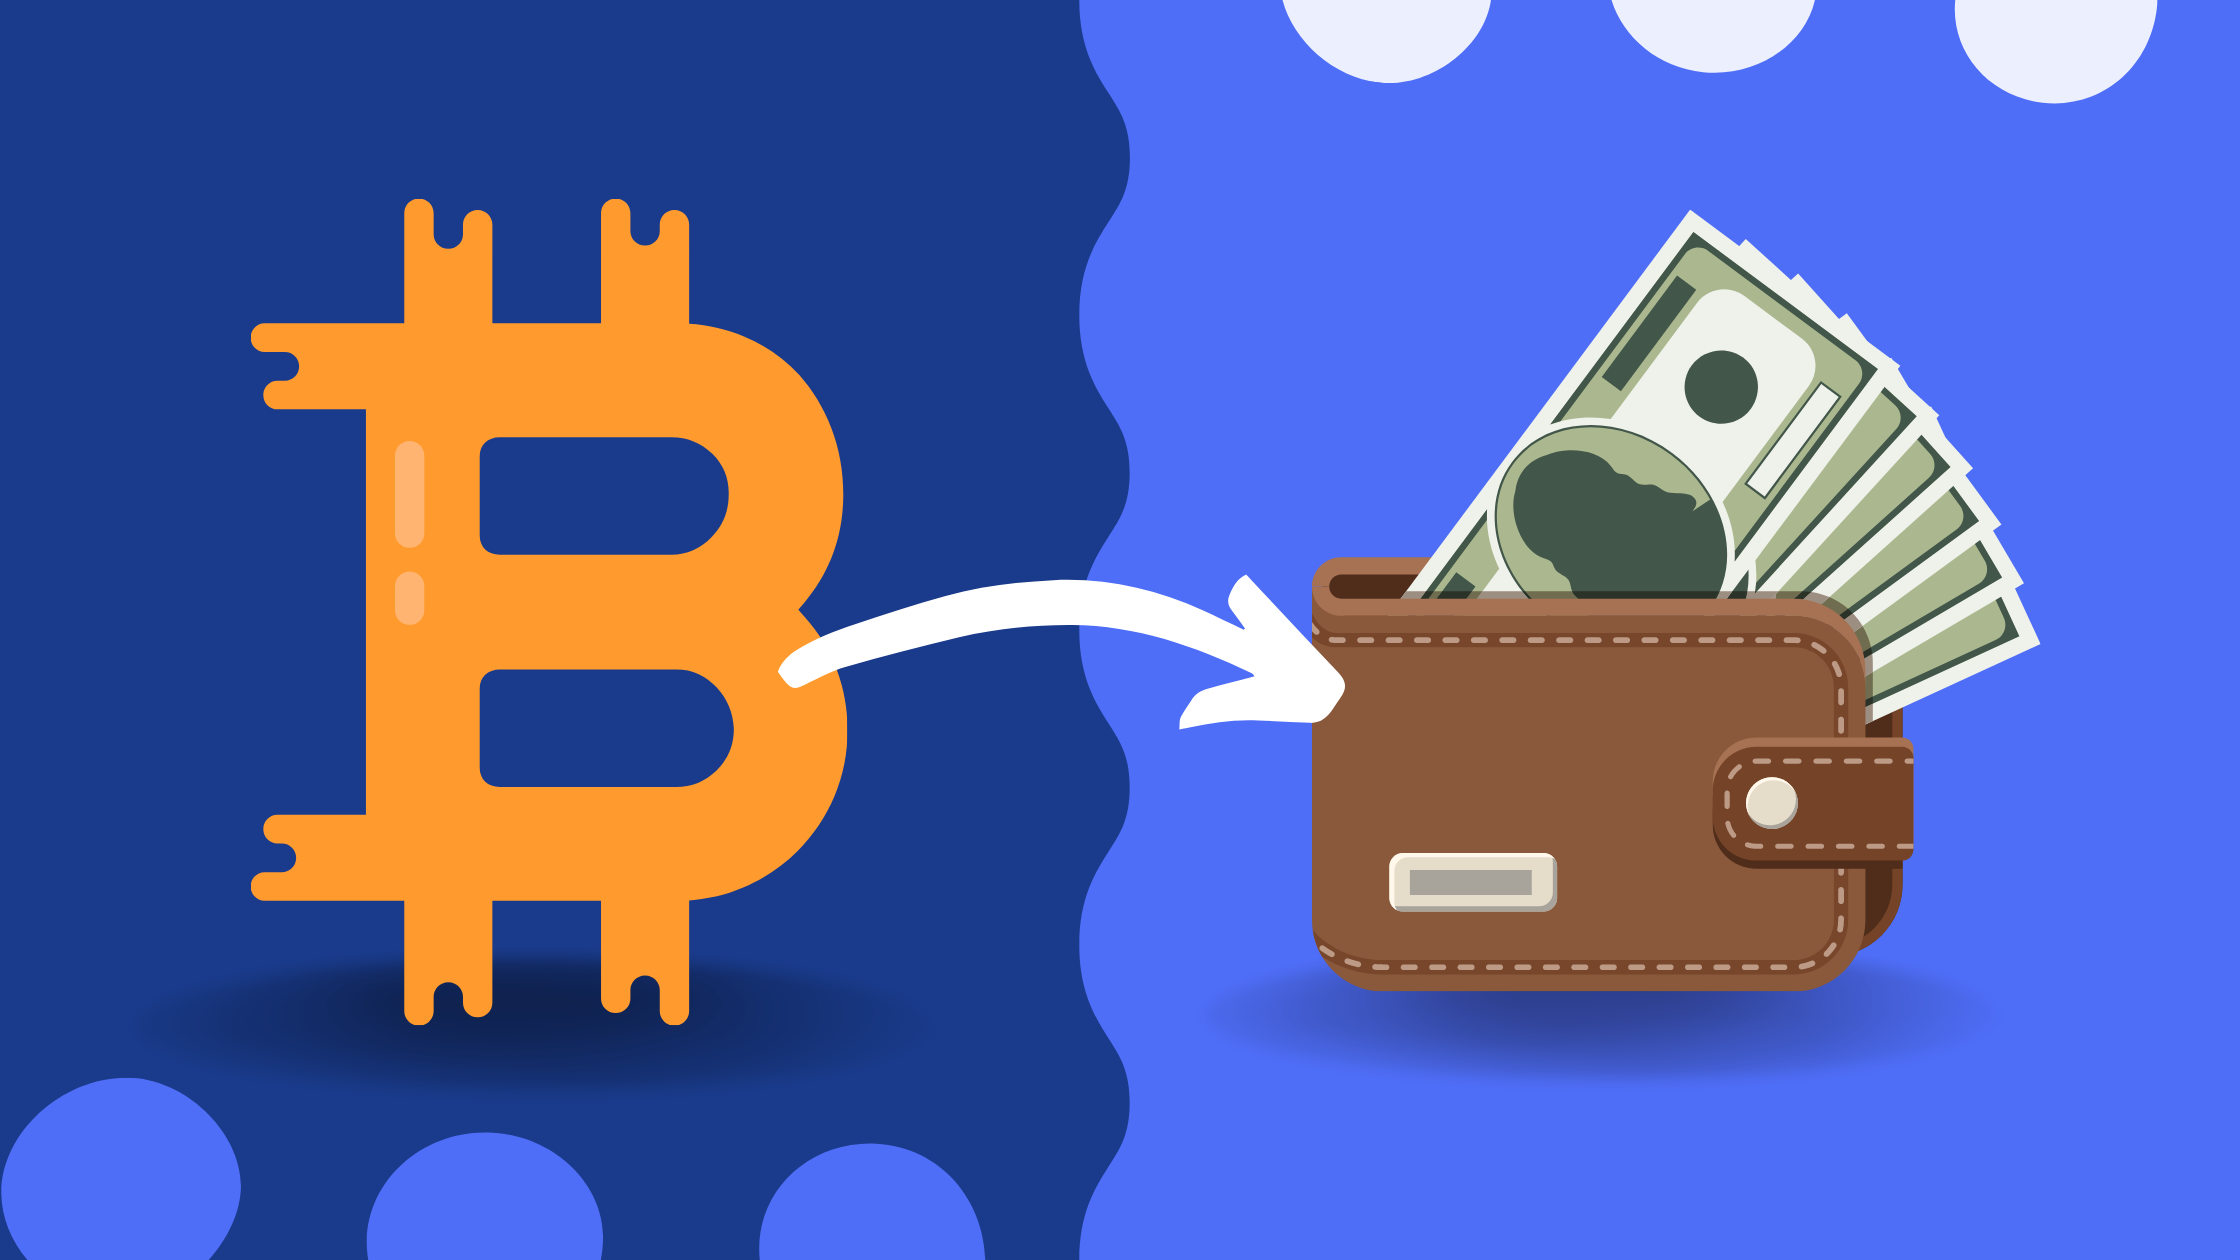 How to Turn Bitcoin into Cash in - swissmoney